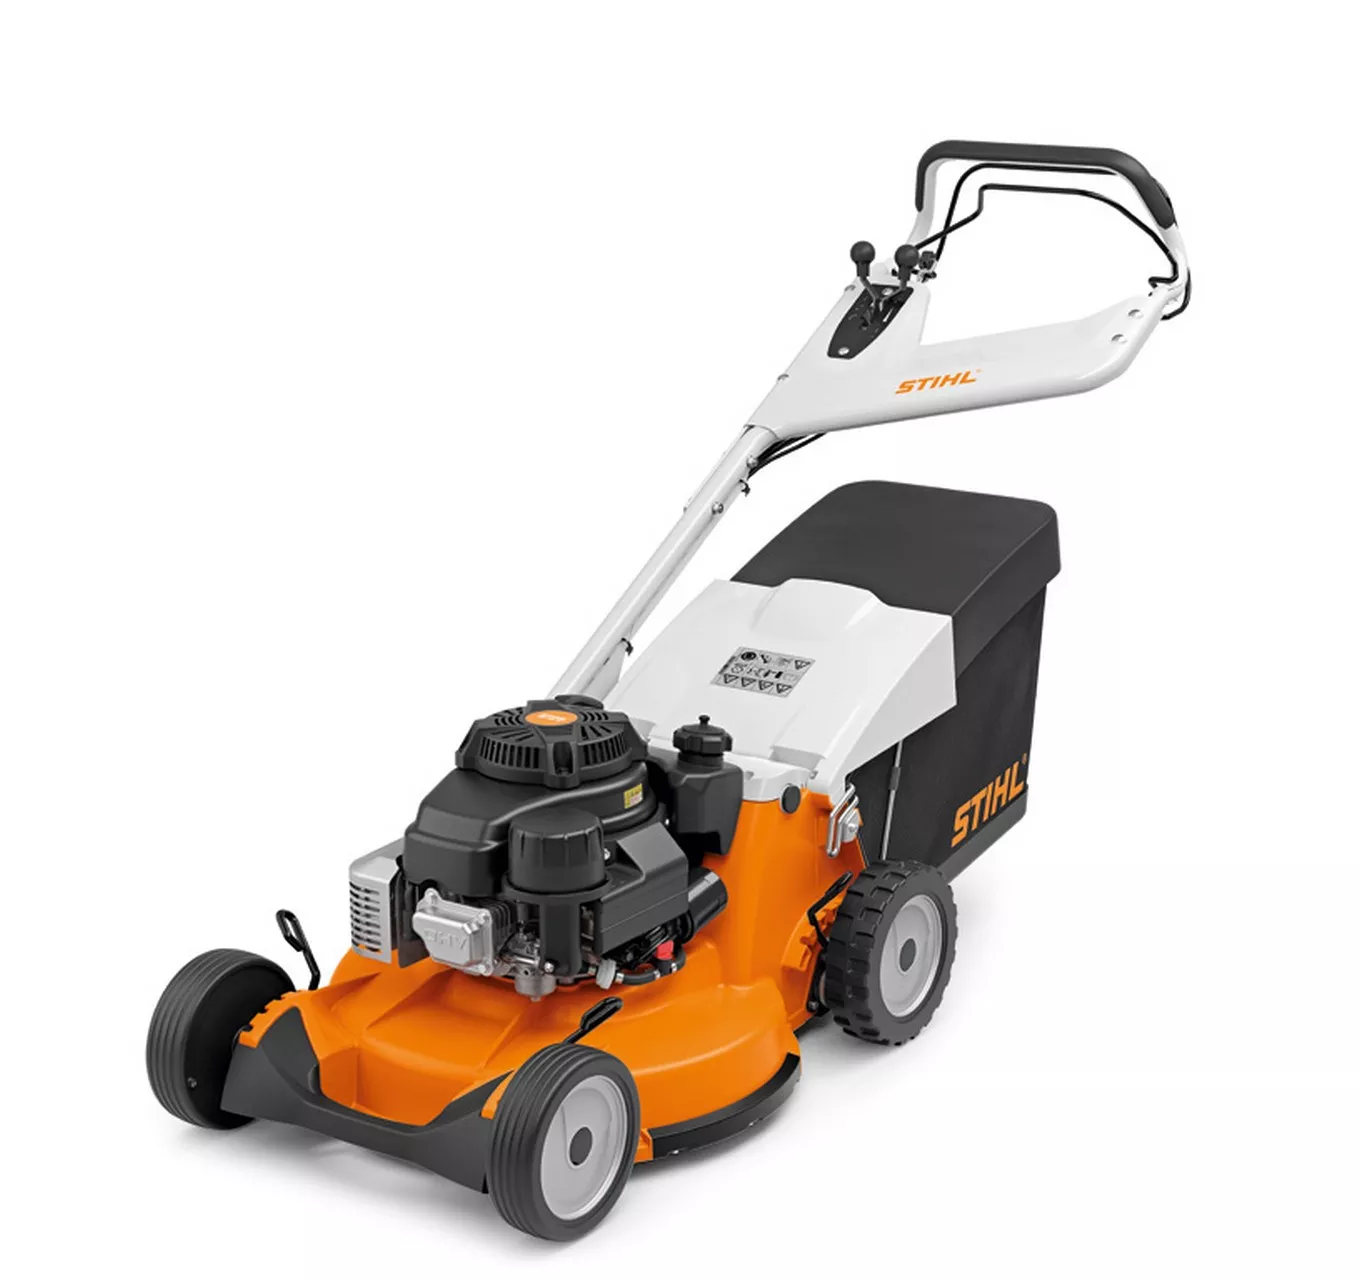 RM 756 GC Lawn Mower